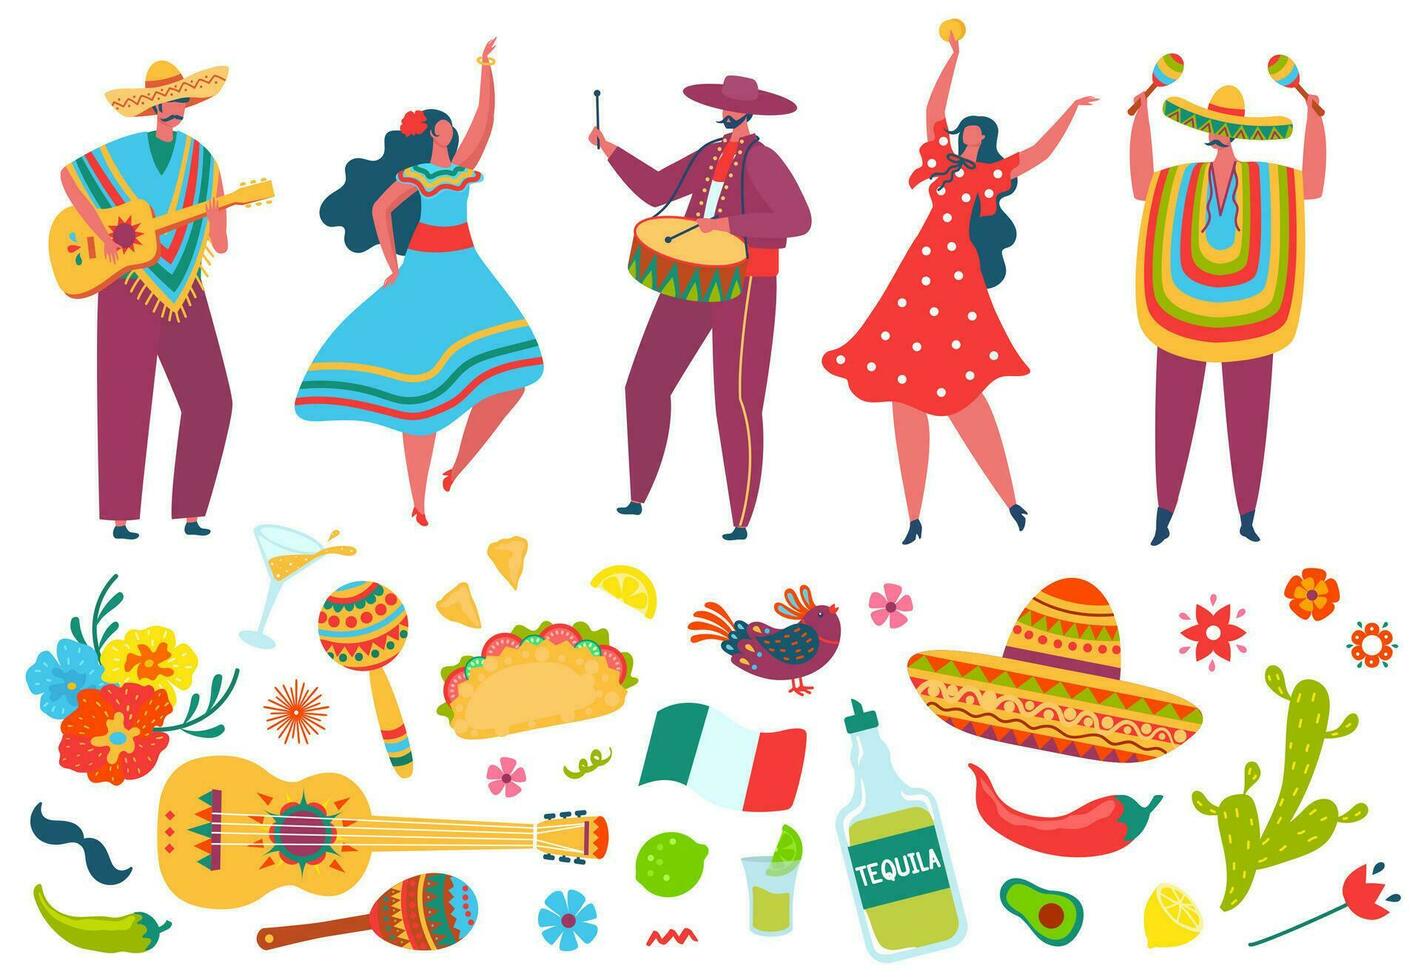 Cinco de mayo fiesta elements, mexican people in traditional clothes. Mexico festival celebration, mariachi band, sombrero, guitar vector set